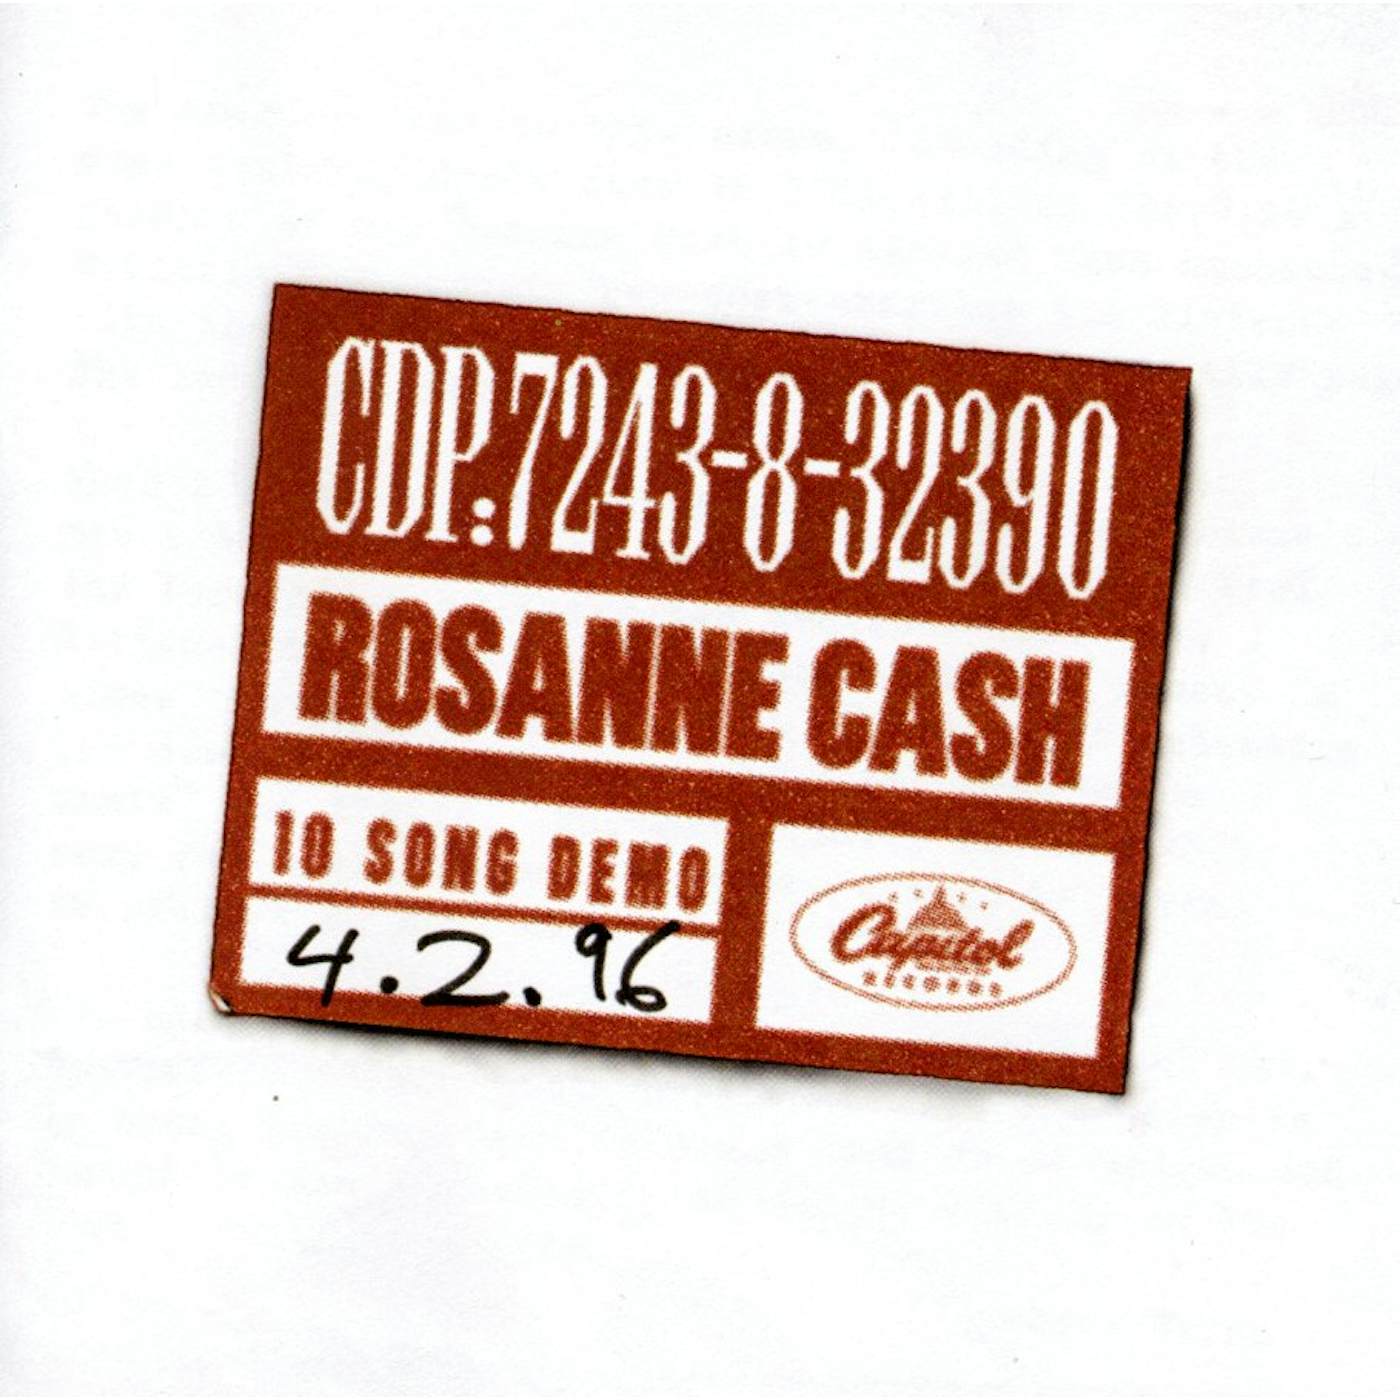 Rosanne Cash 10 SONG DEMO CD